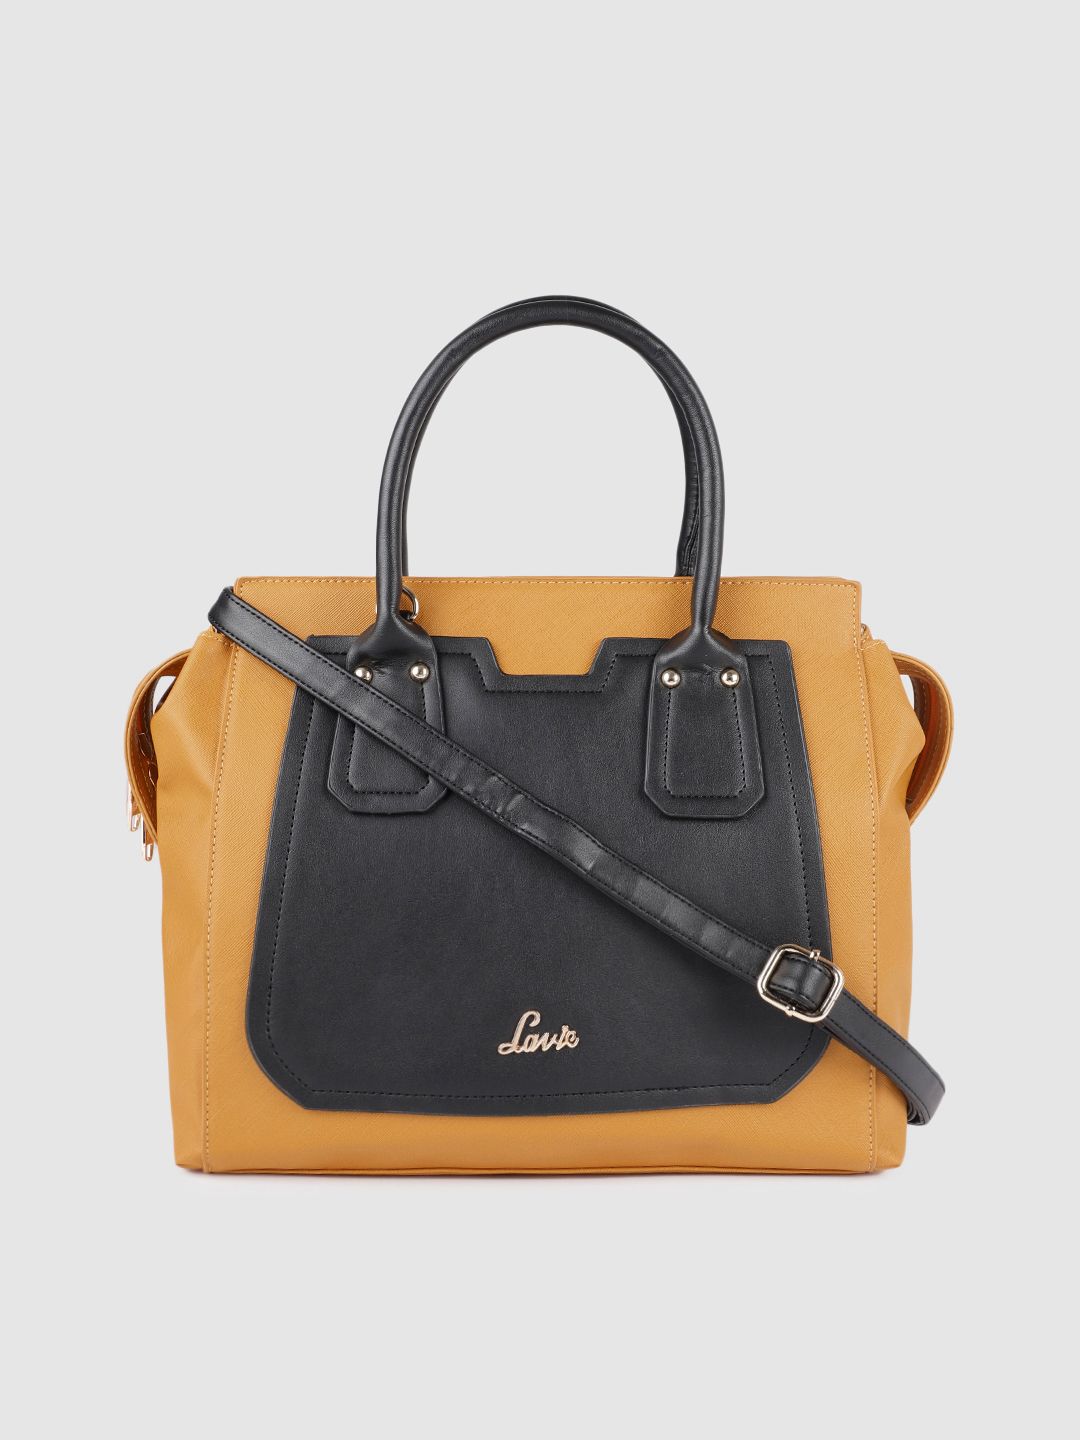 Lavie Yellow & Black Color-blocked Shoulder Bag Price in India